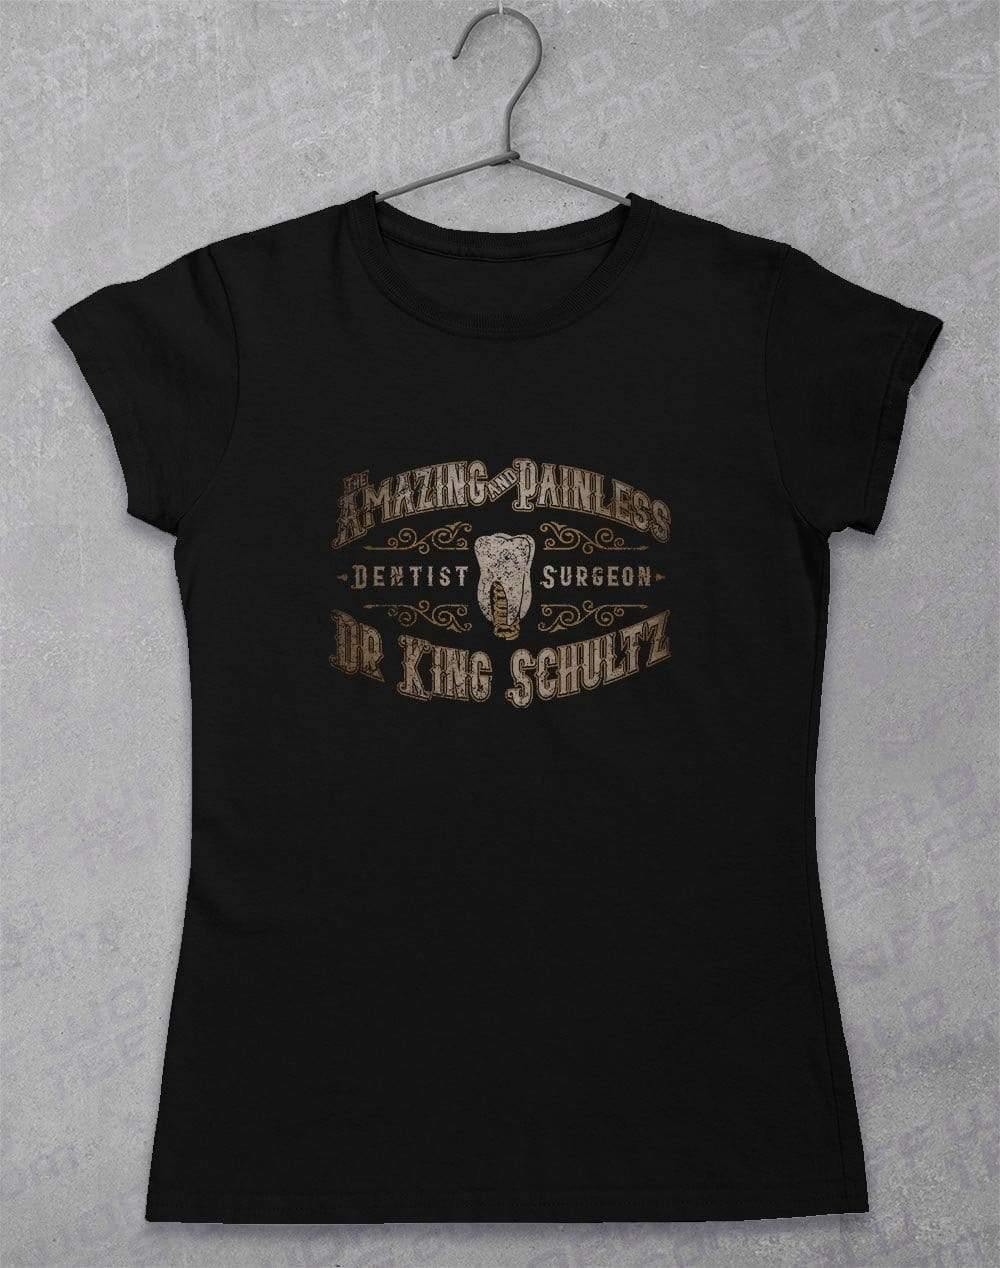 Dr King Schultz - Women's T-Shirt 8-10 / Black  - Off World Tees